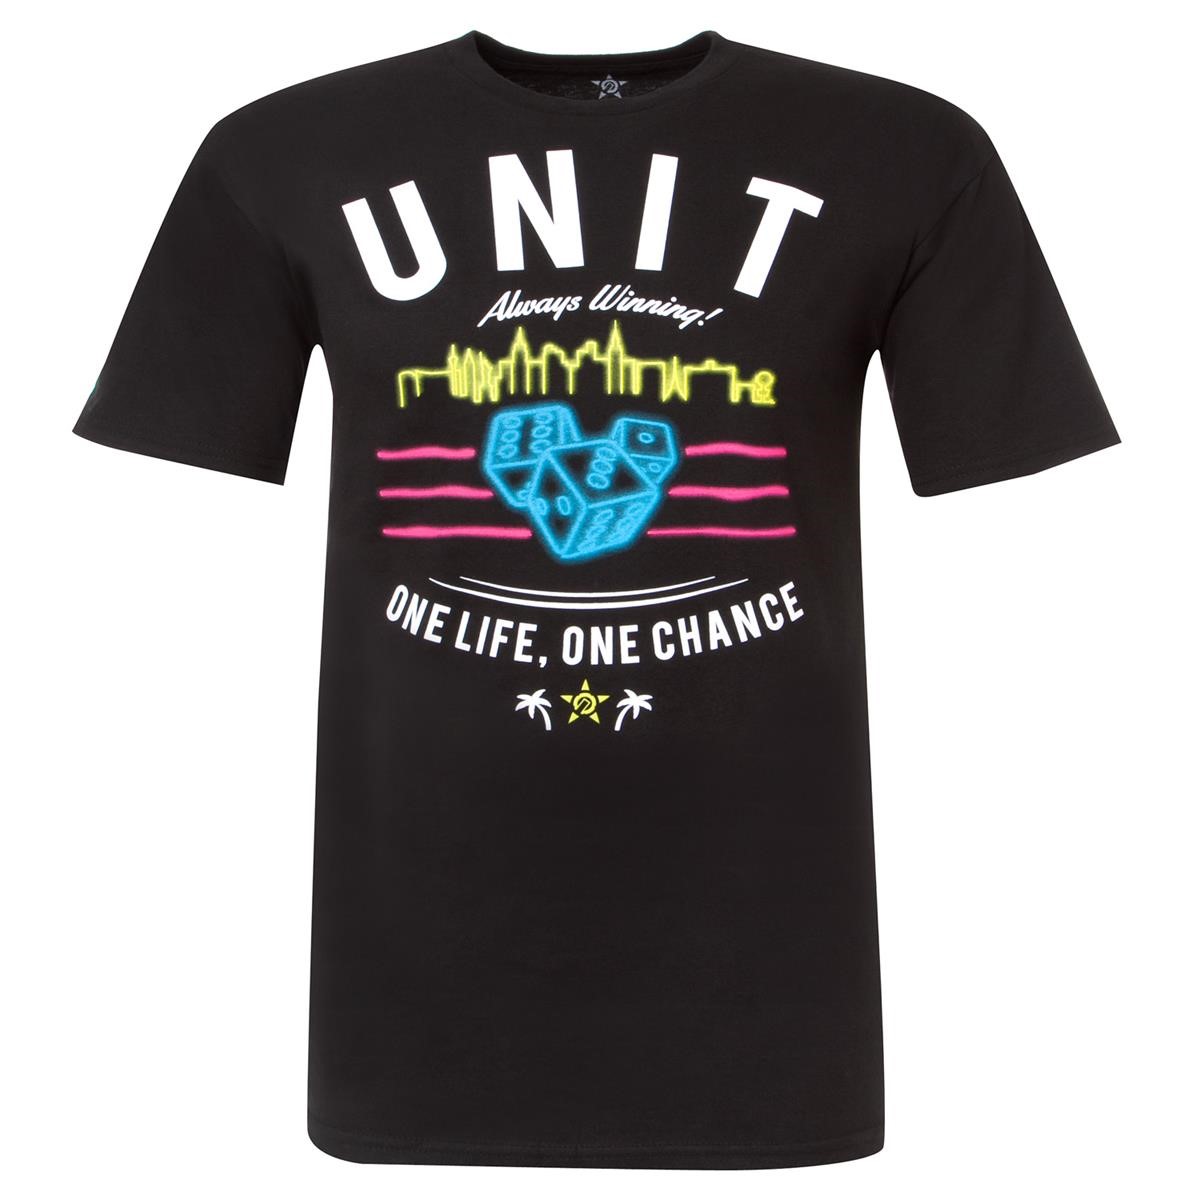 Unit T-Shirt Winning Black